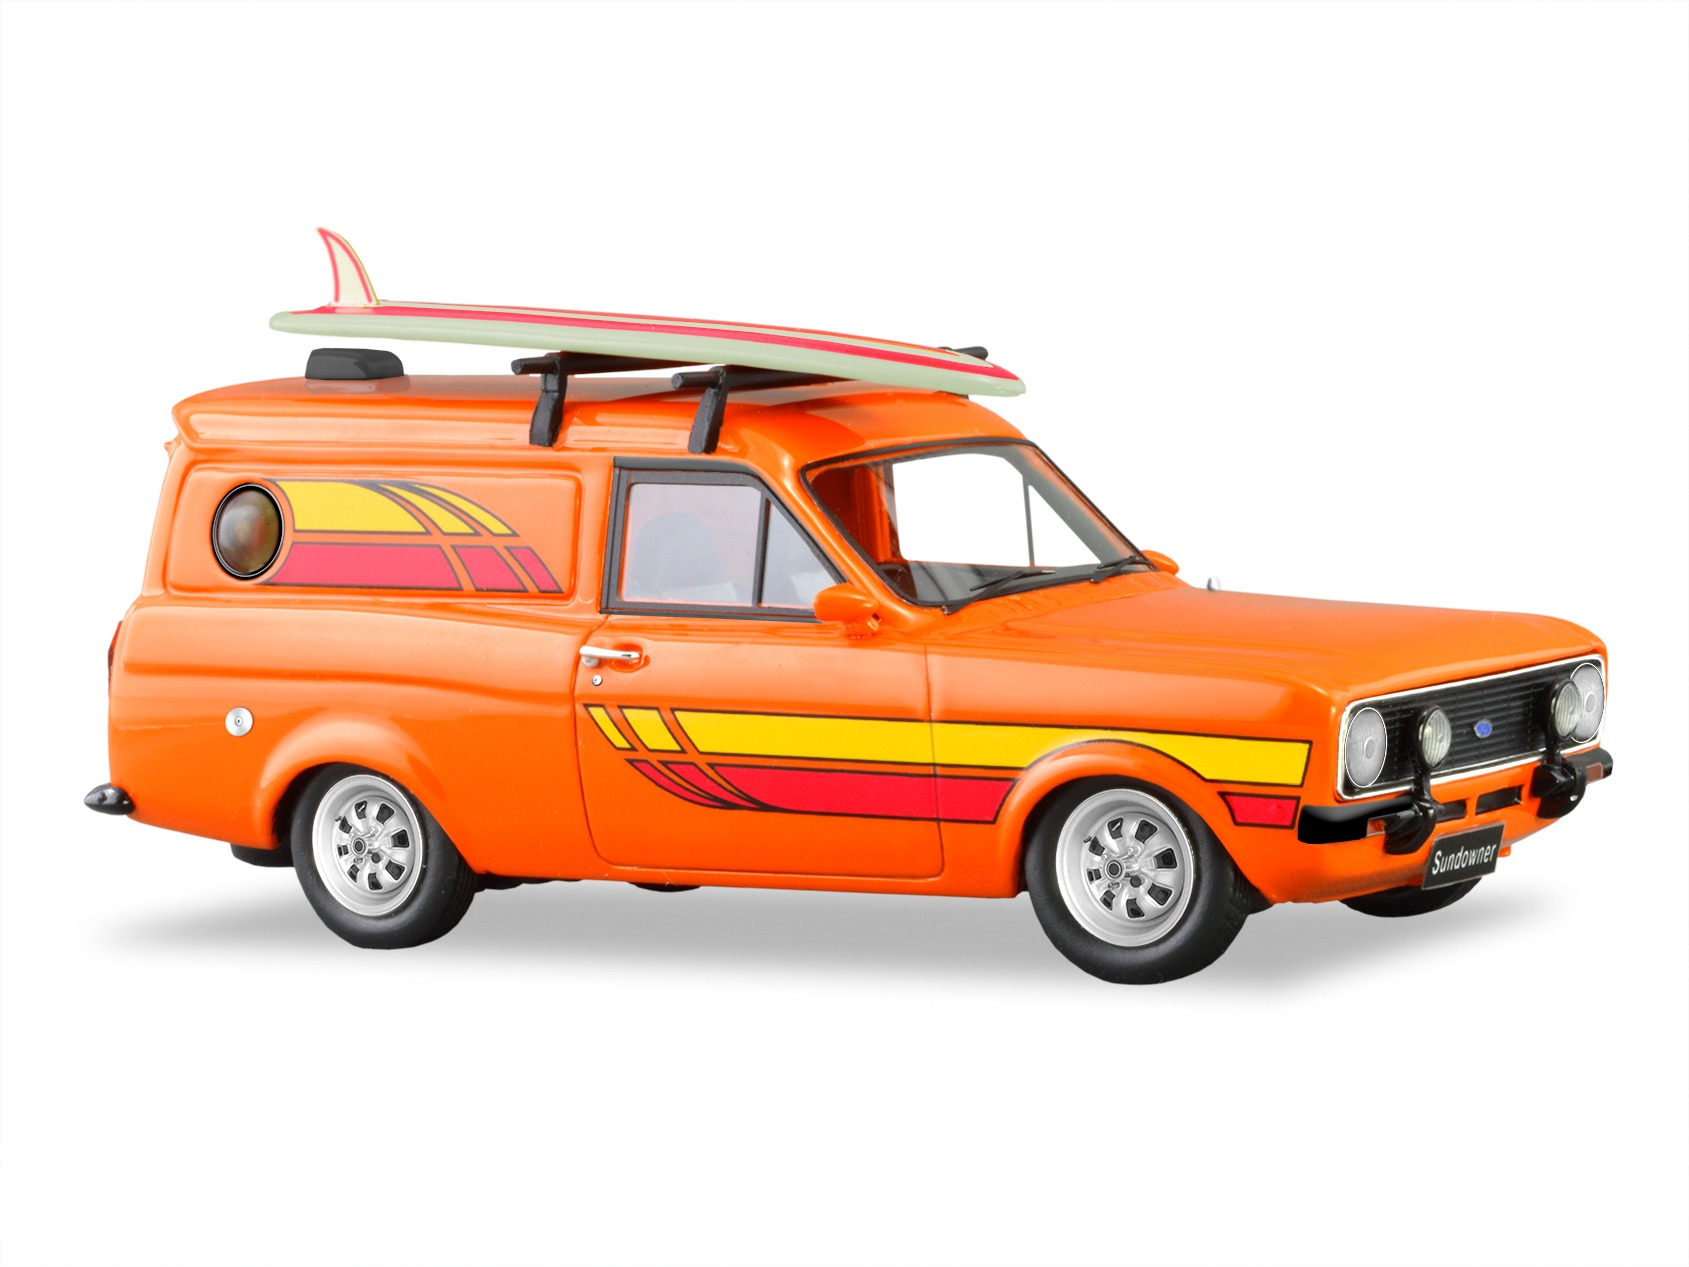 1978 Ford Escort Sundowner Panel Van – Raw Orange With Surfboard